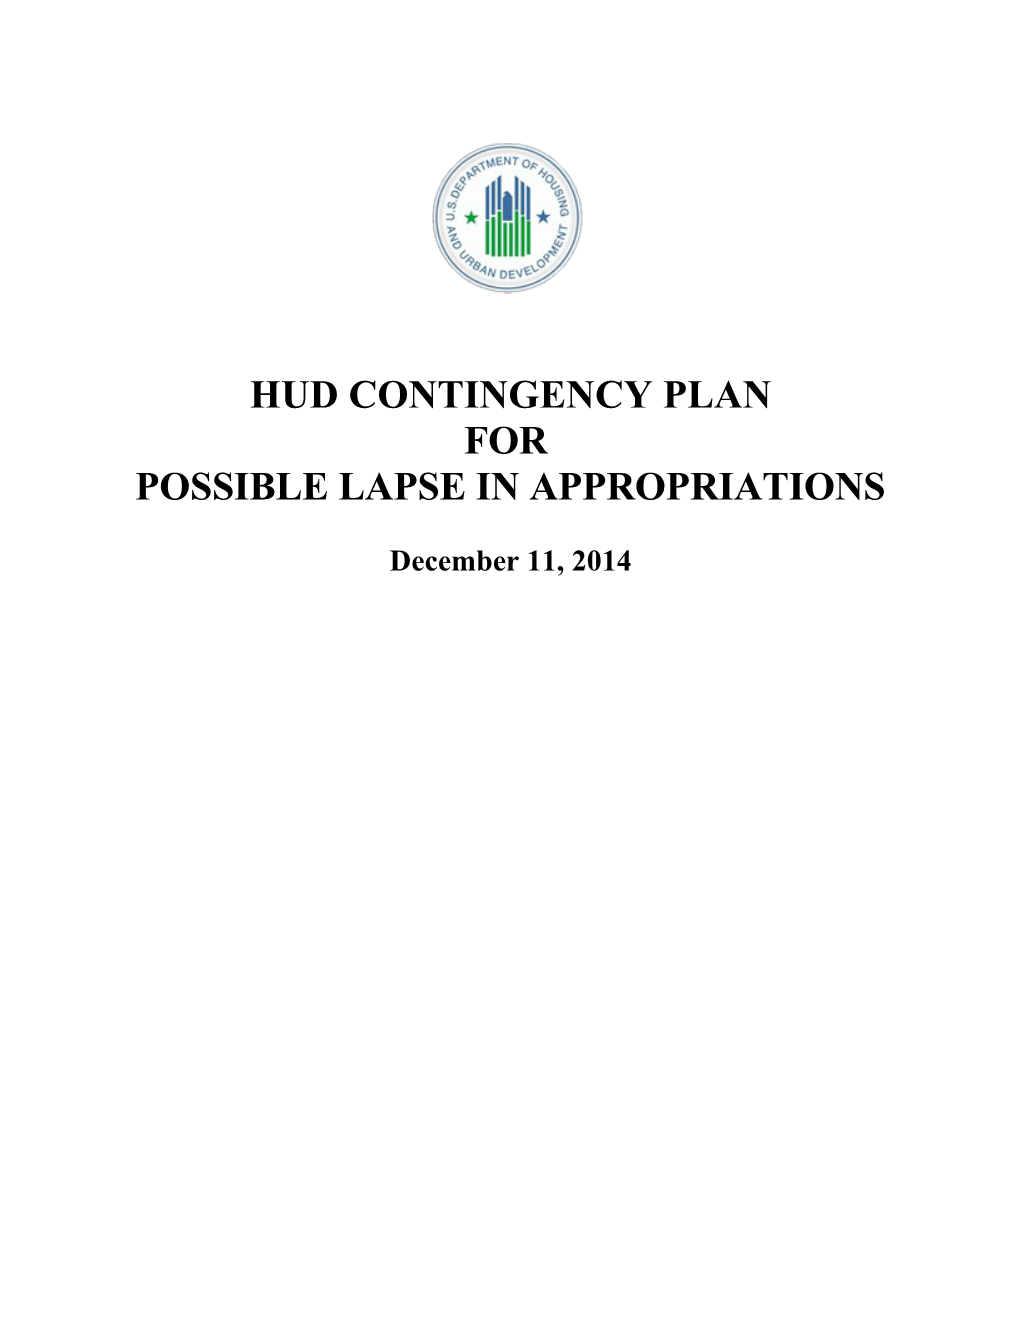 HUD Contingency Plan 12/11/14 87